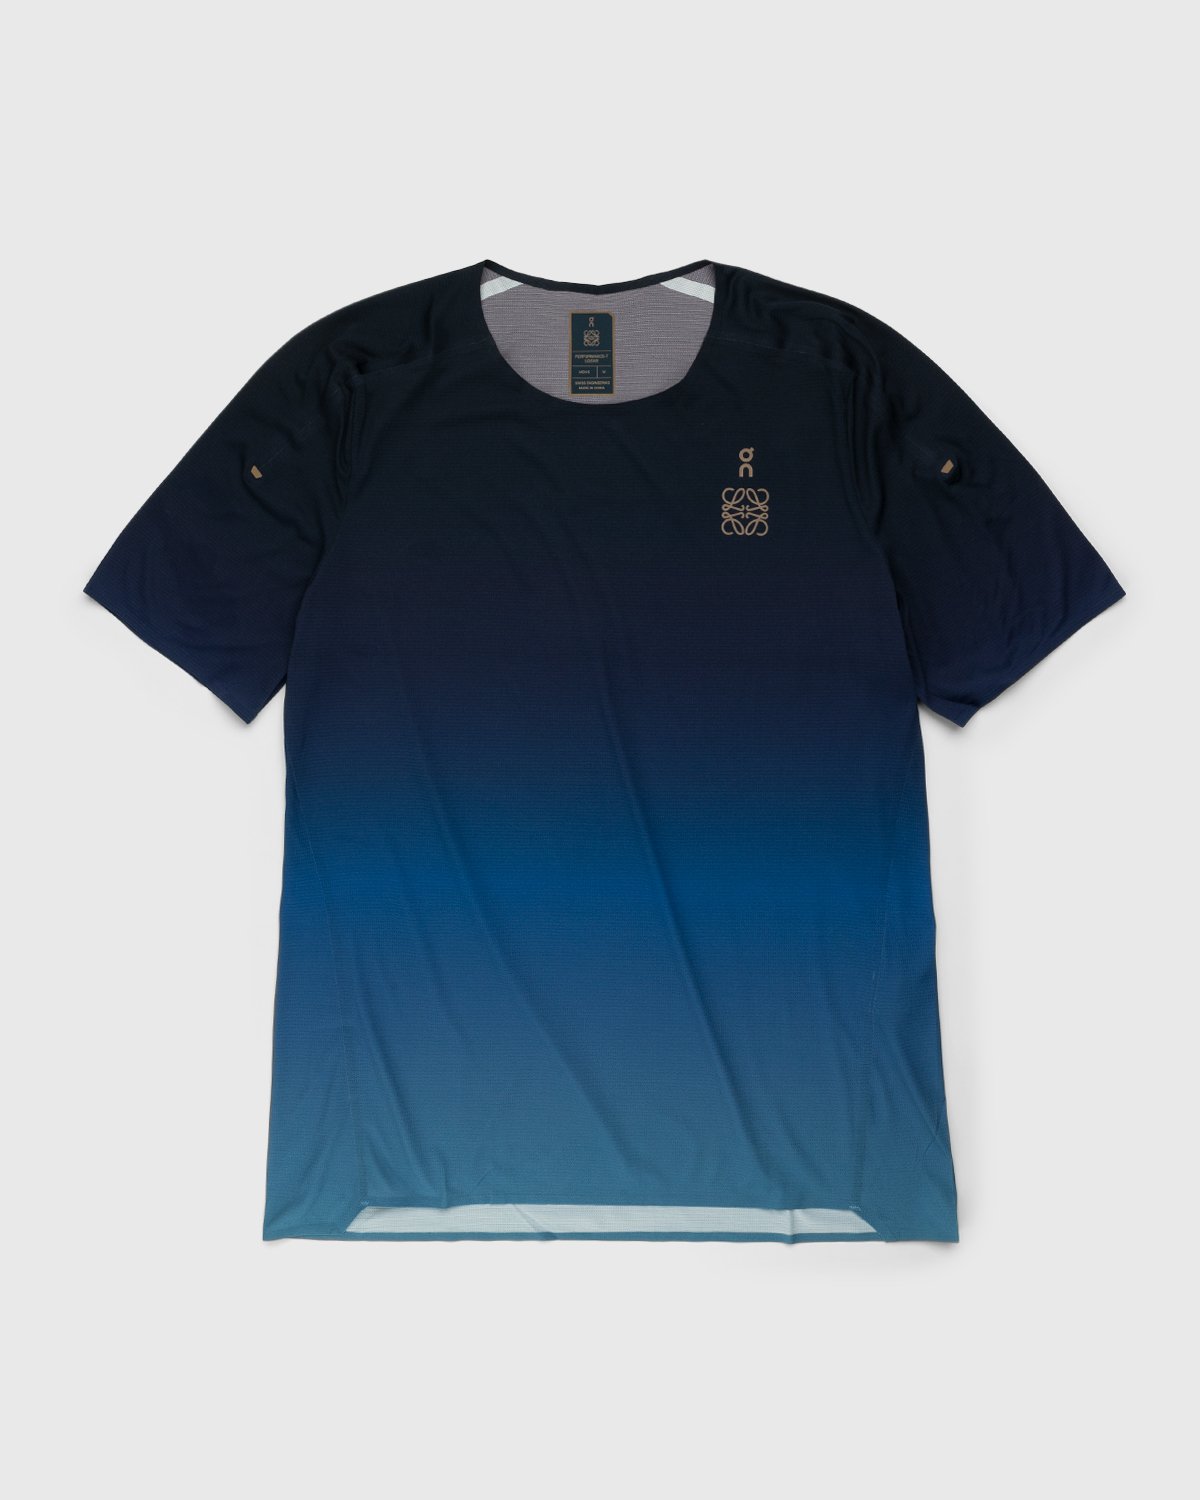 Loewe x On – Men's Performance T-Shirt Gradient Blue | Highsnobiety Shop